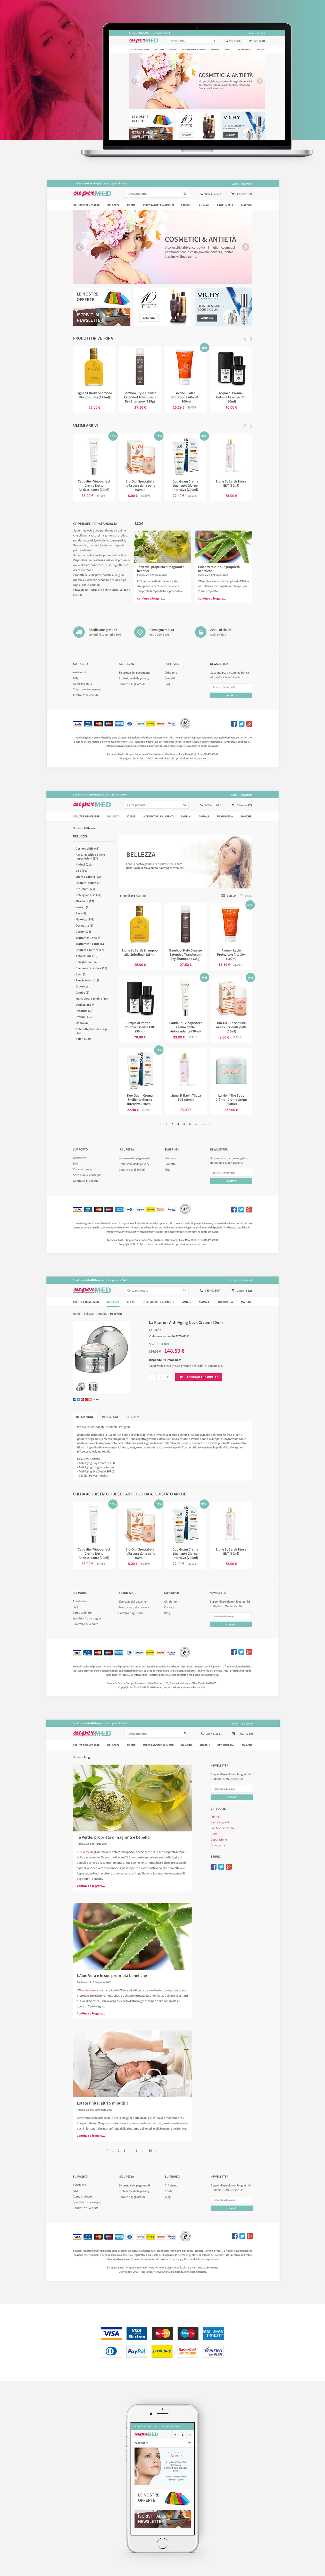 Ecommerce user experience ux/ui Website Design eCommerce design shop store parapharmacy